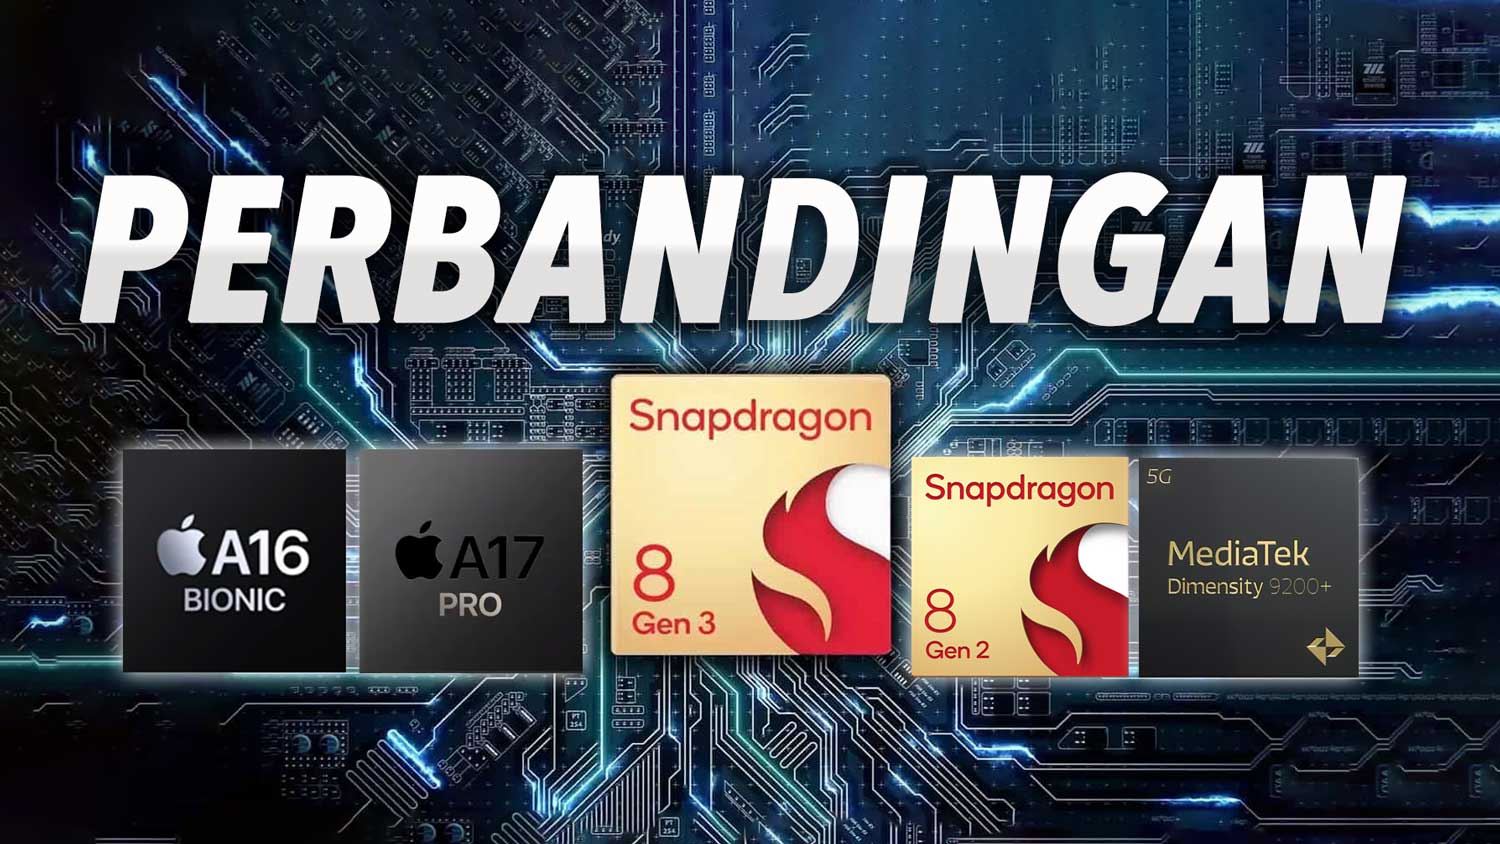 Perbandingan Snapdragon 8 Gen 3, A17 Pro, 8 Gen 2, A16 Bionic Dan Dimensity 9200+